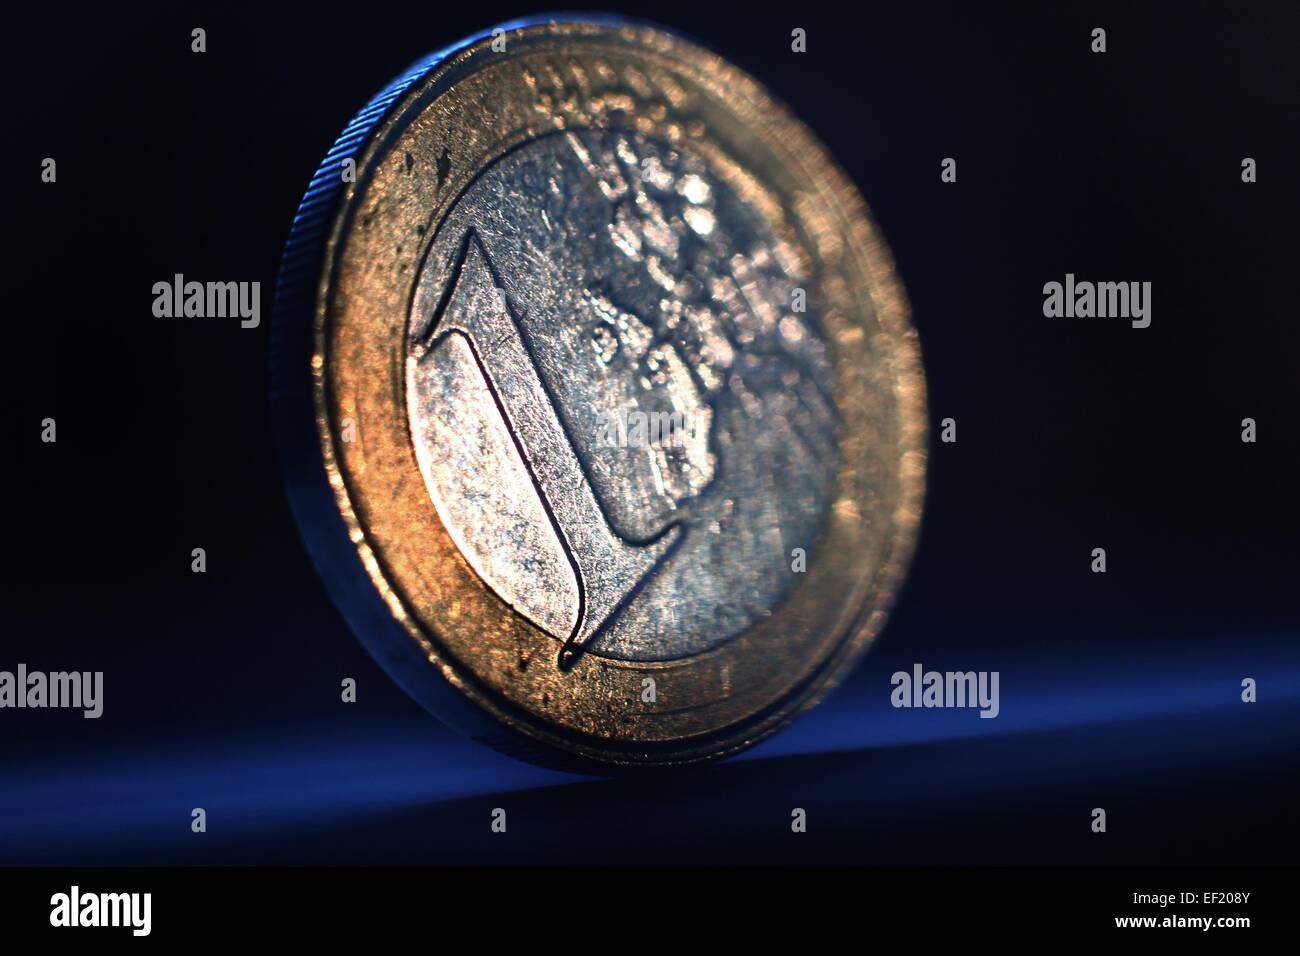 Kempten, Germania. 23 gen 2014. Un Euro moneta a Kempten, Germania, 23 gennaio 2014. Foto: Karl-Josef Hildenbrand/dpa/Alamy Live News Foto Stock